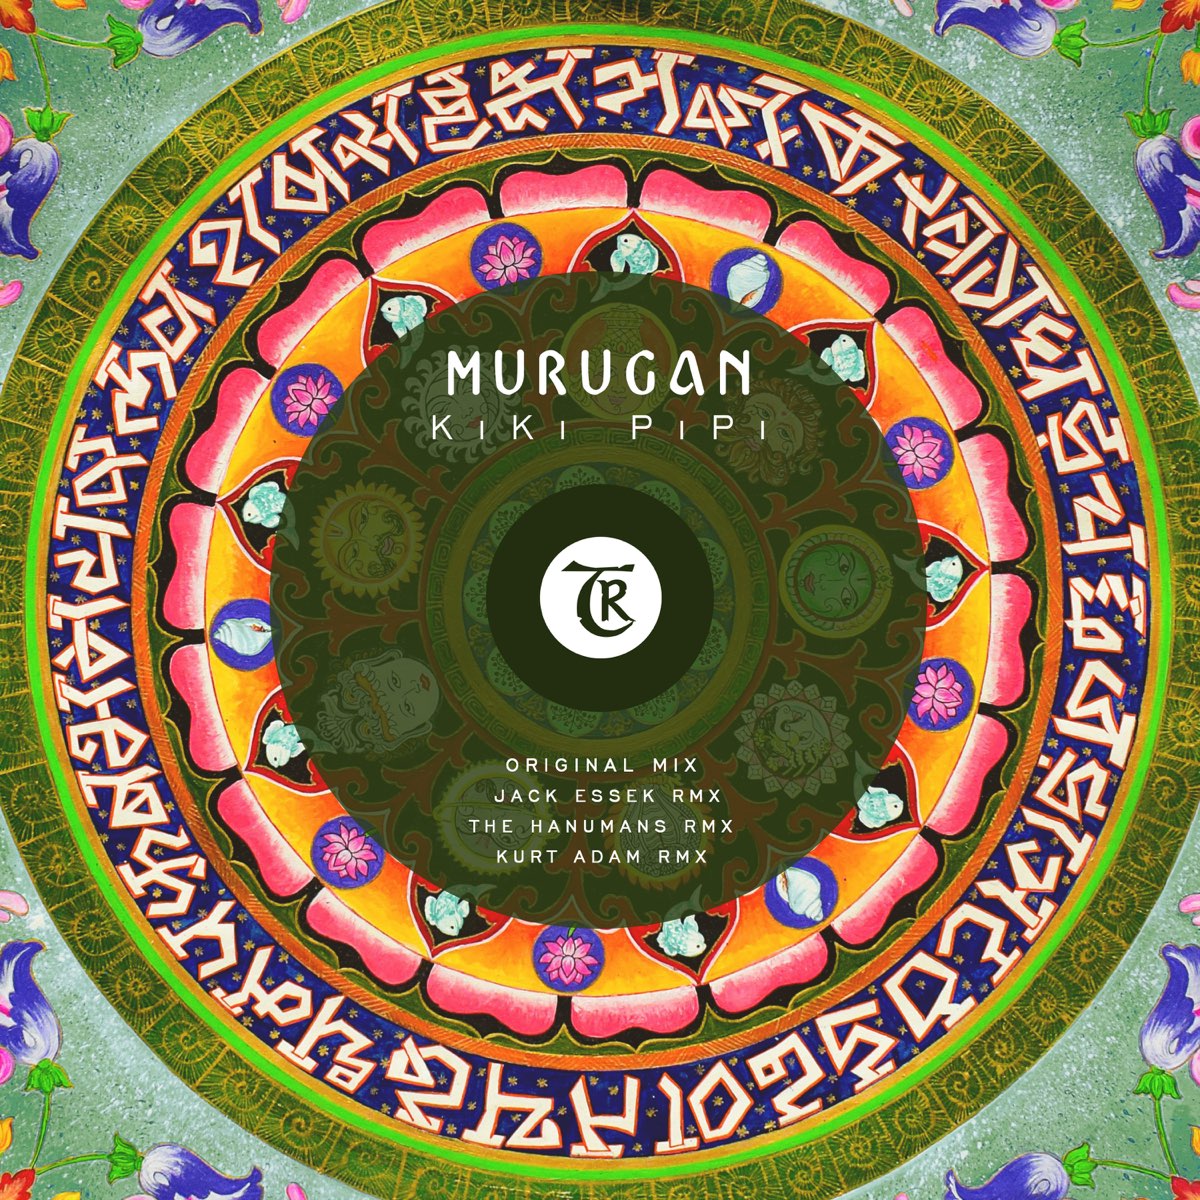 ‎KiKi PiPi - EP - Album by Murugan & Tibetania - Apple Music